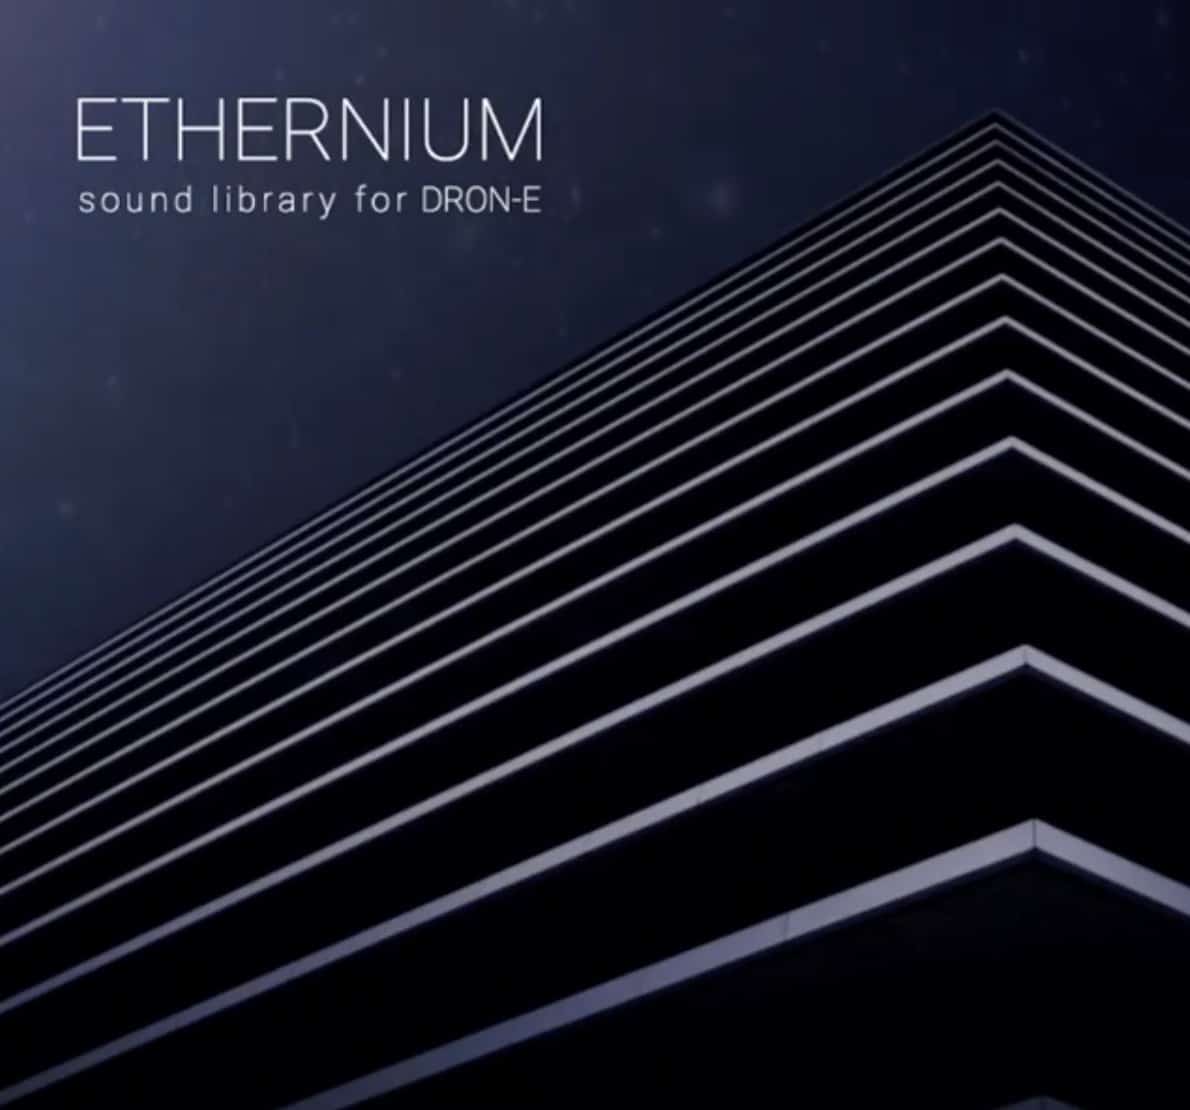 Ethernium sound library for DRON E